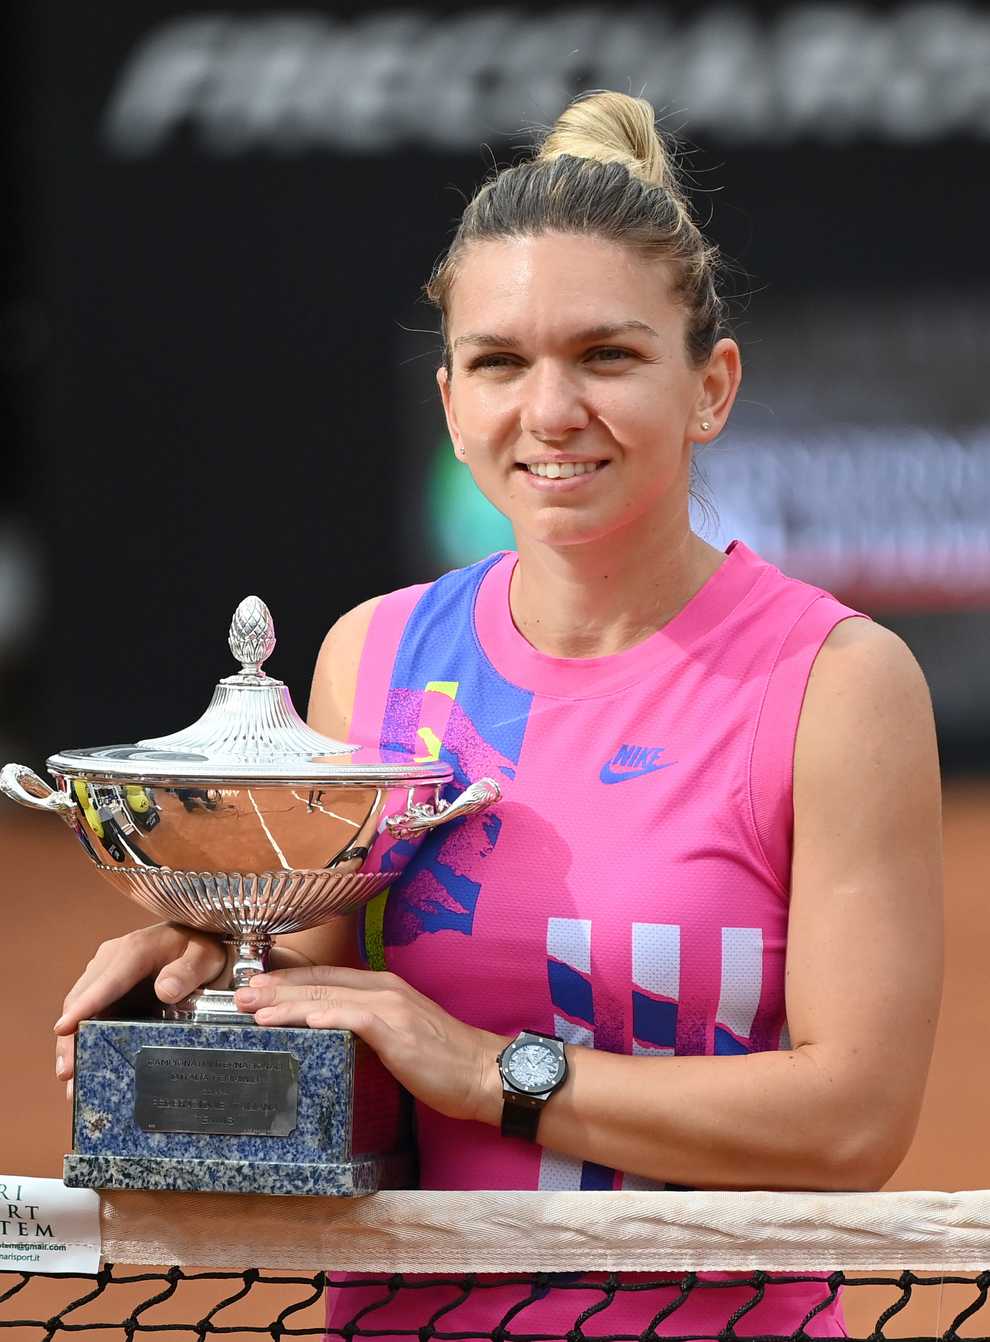 Simona Halep has won her third consecutive title of the 2020 season 